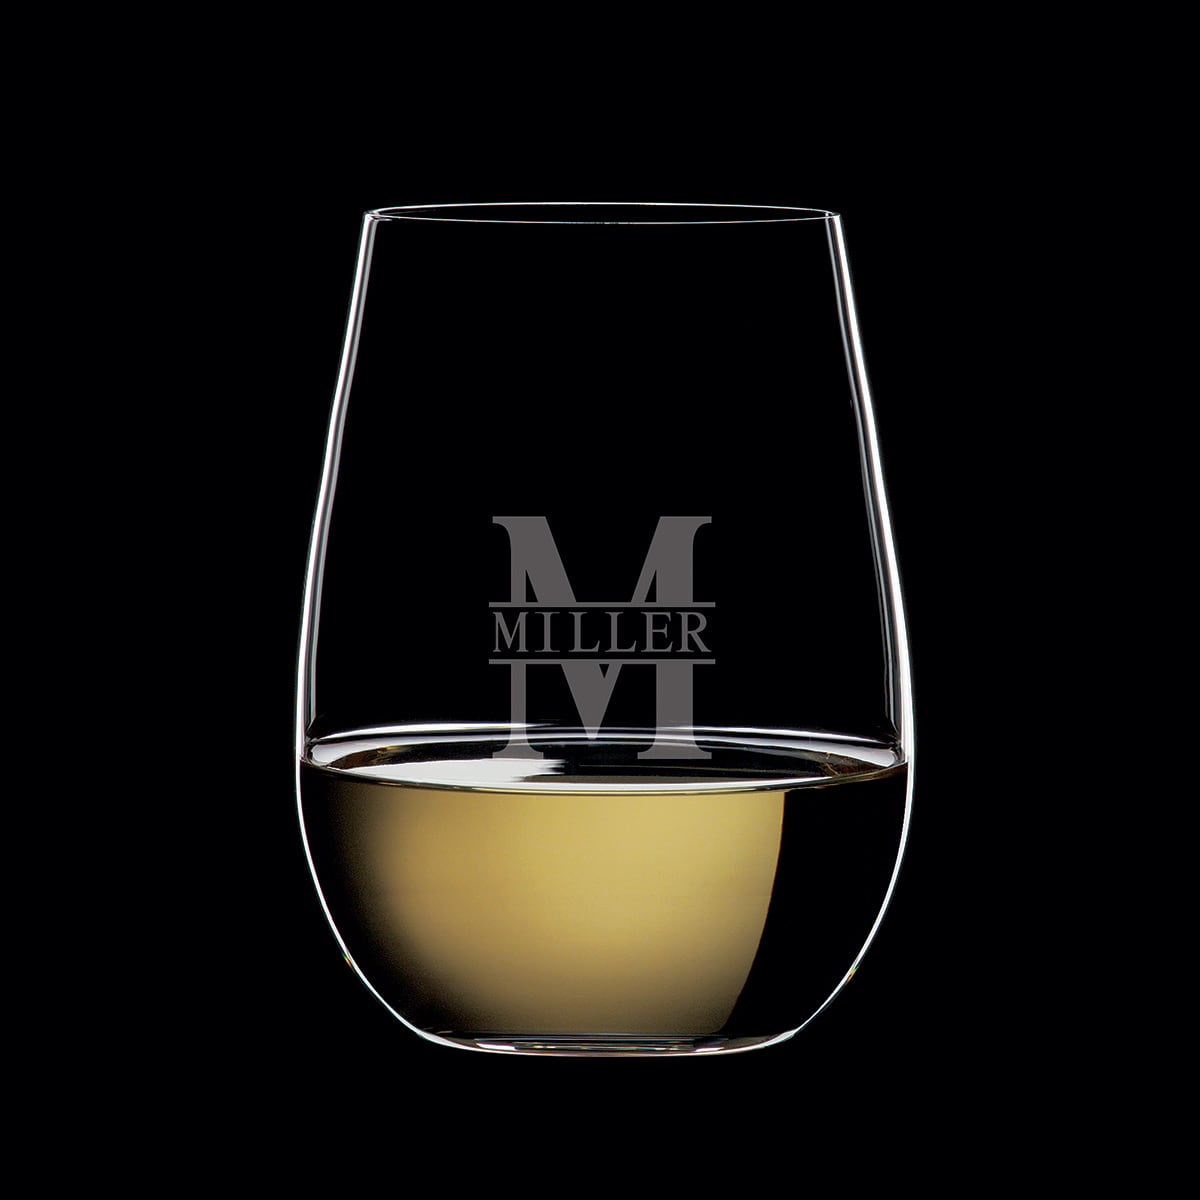 Riedel Stemless Wine Glasses, Chardonnay/White Wine - Set of 2